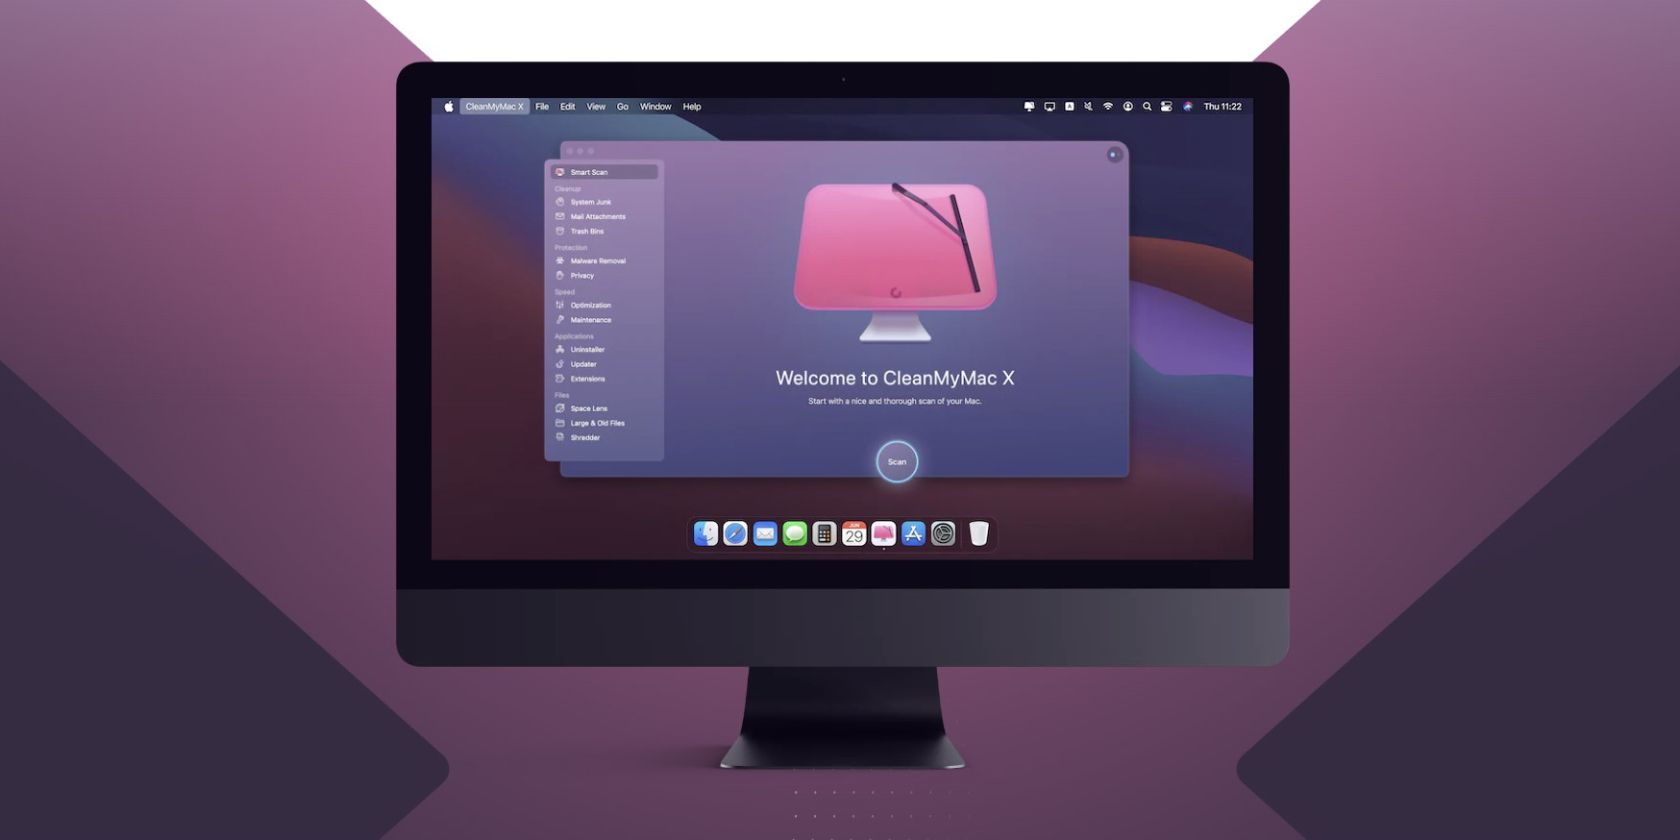 CleanMyMac X running on an iMac